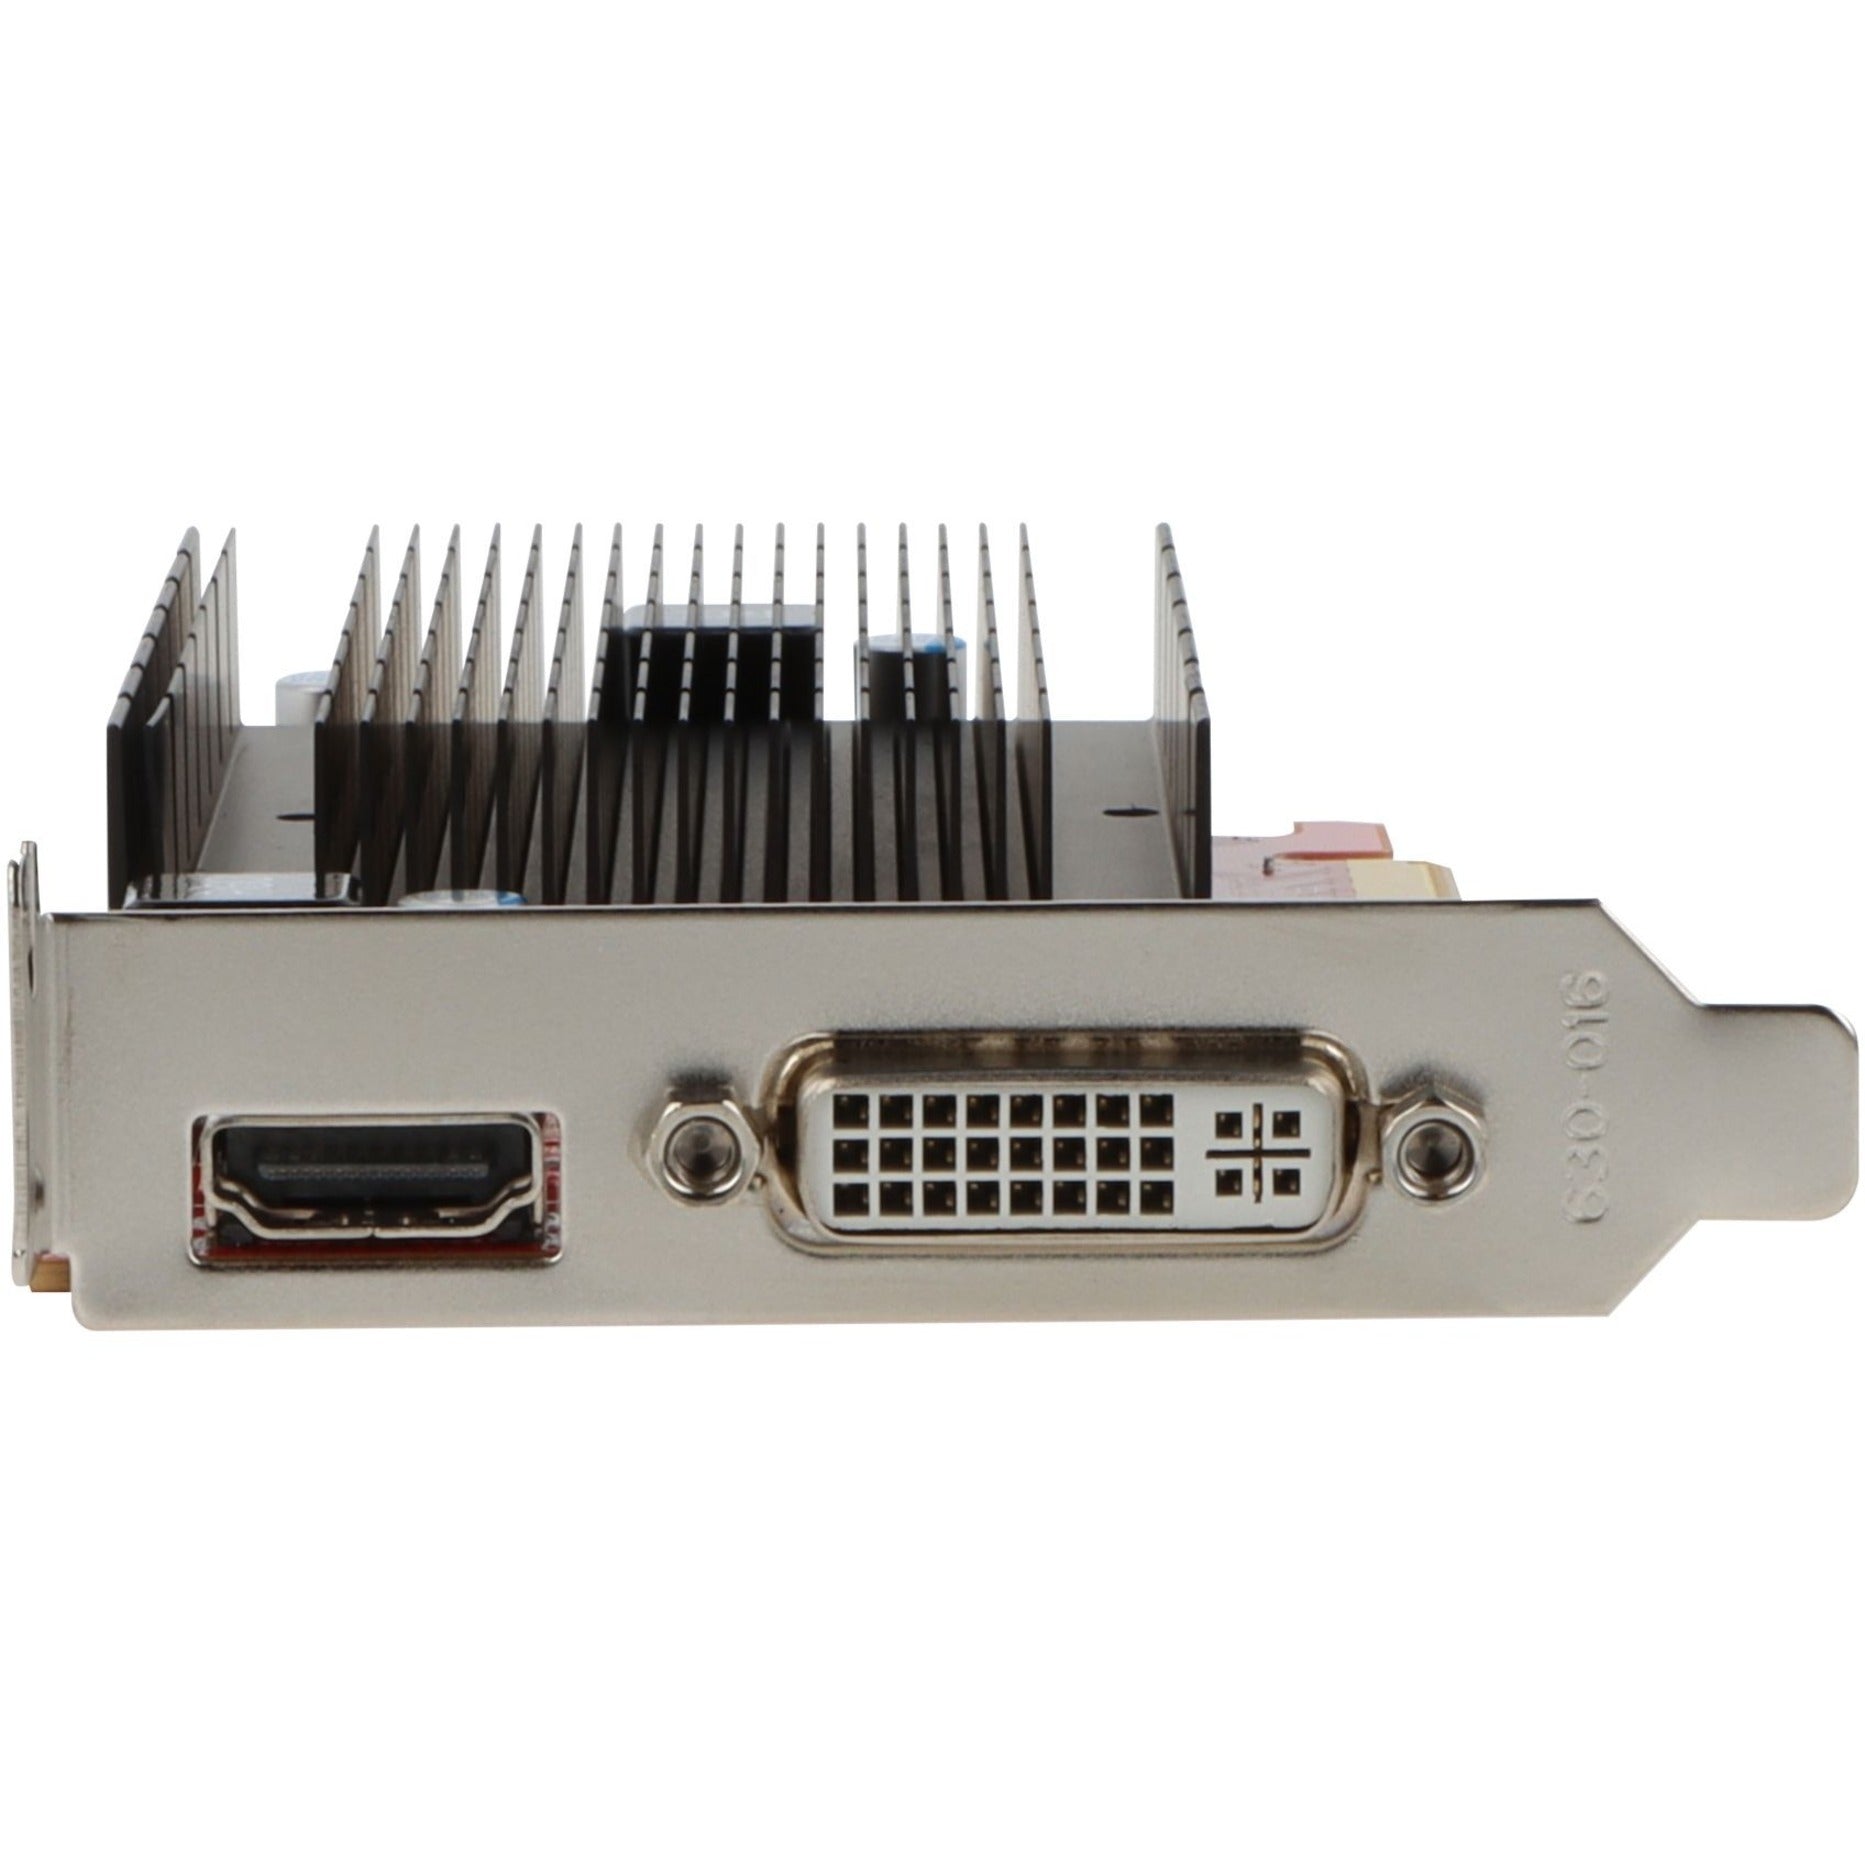 VisionTek 900484 Radeon 6350 SFF 1GB DDR3 Graphic Card, DVI-I, HDMI, VGA, DirectX 11.0